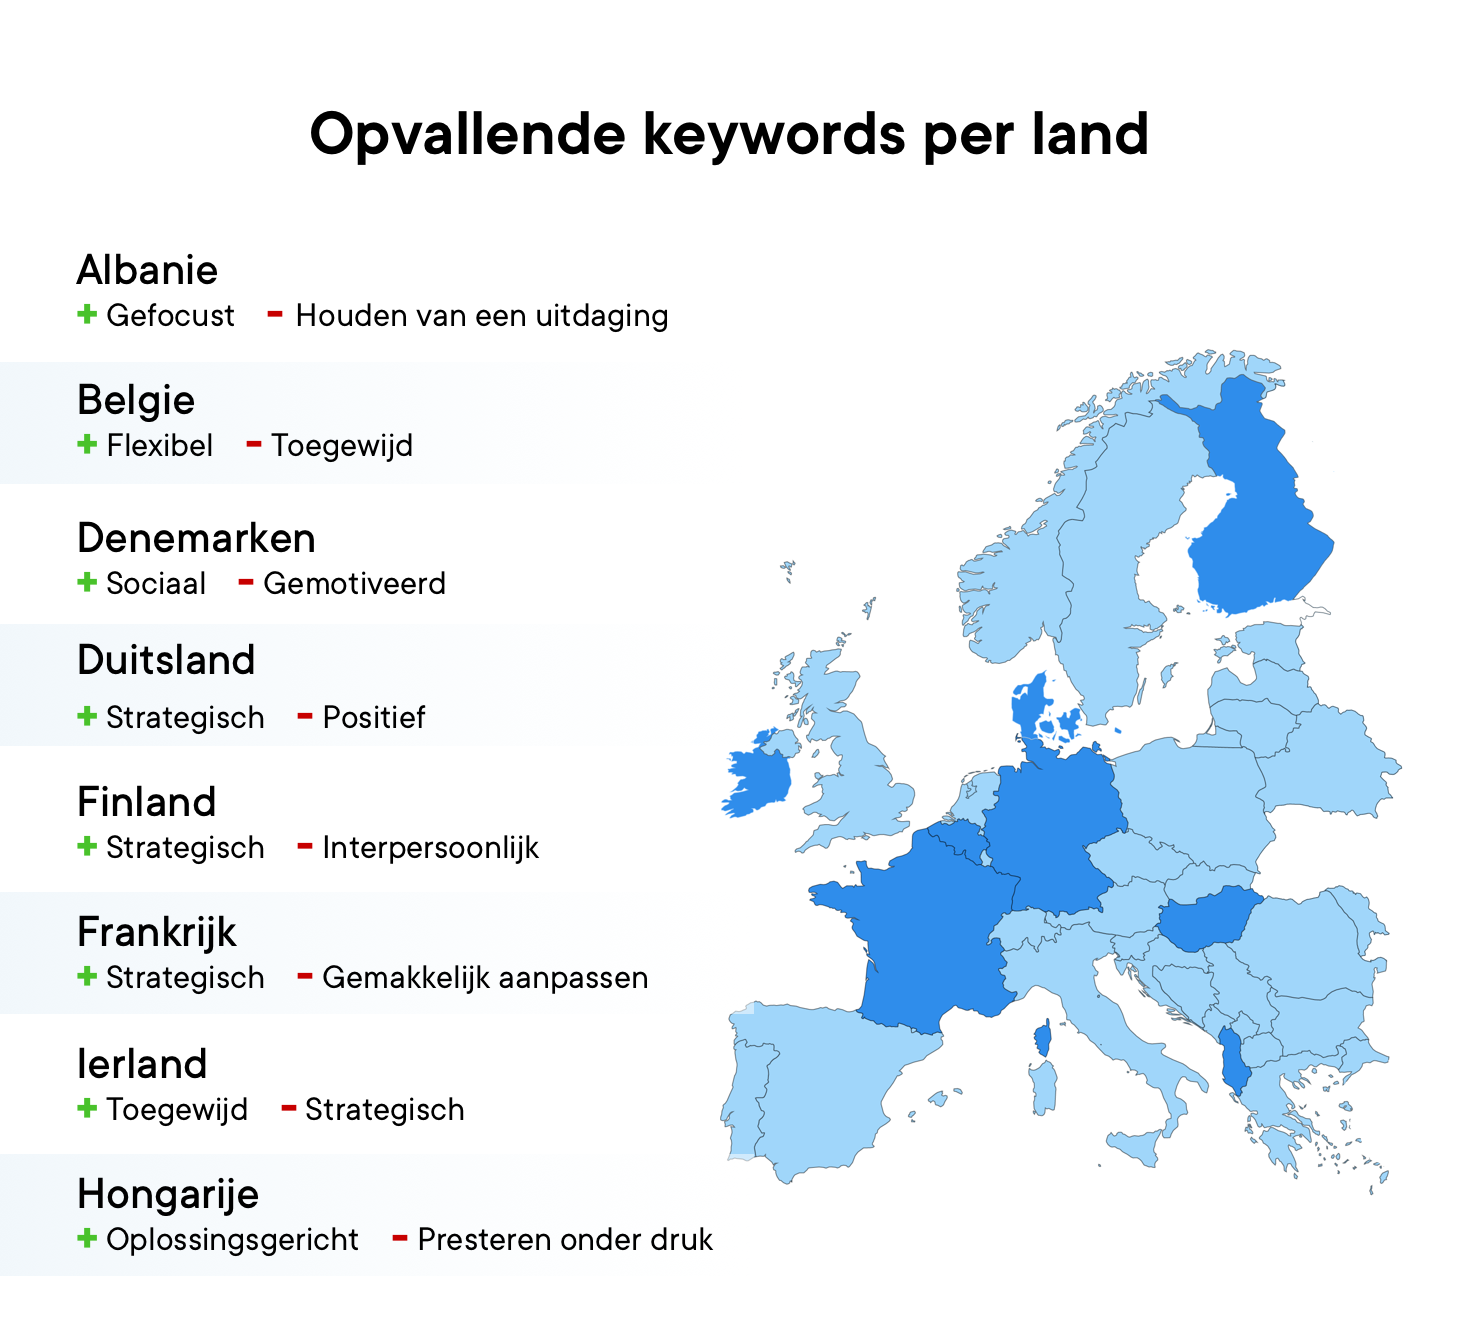 Opvallende keywords per land.